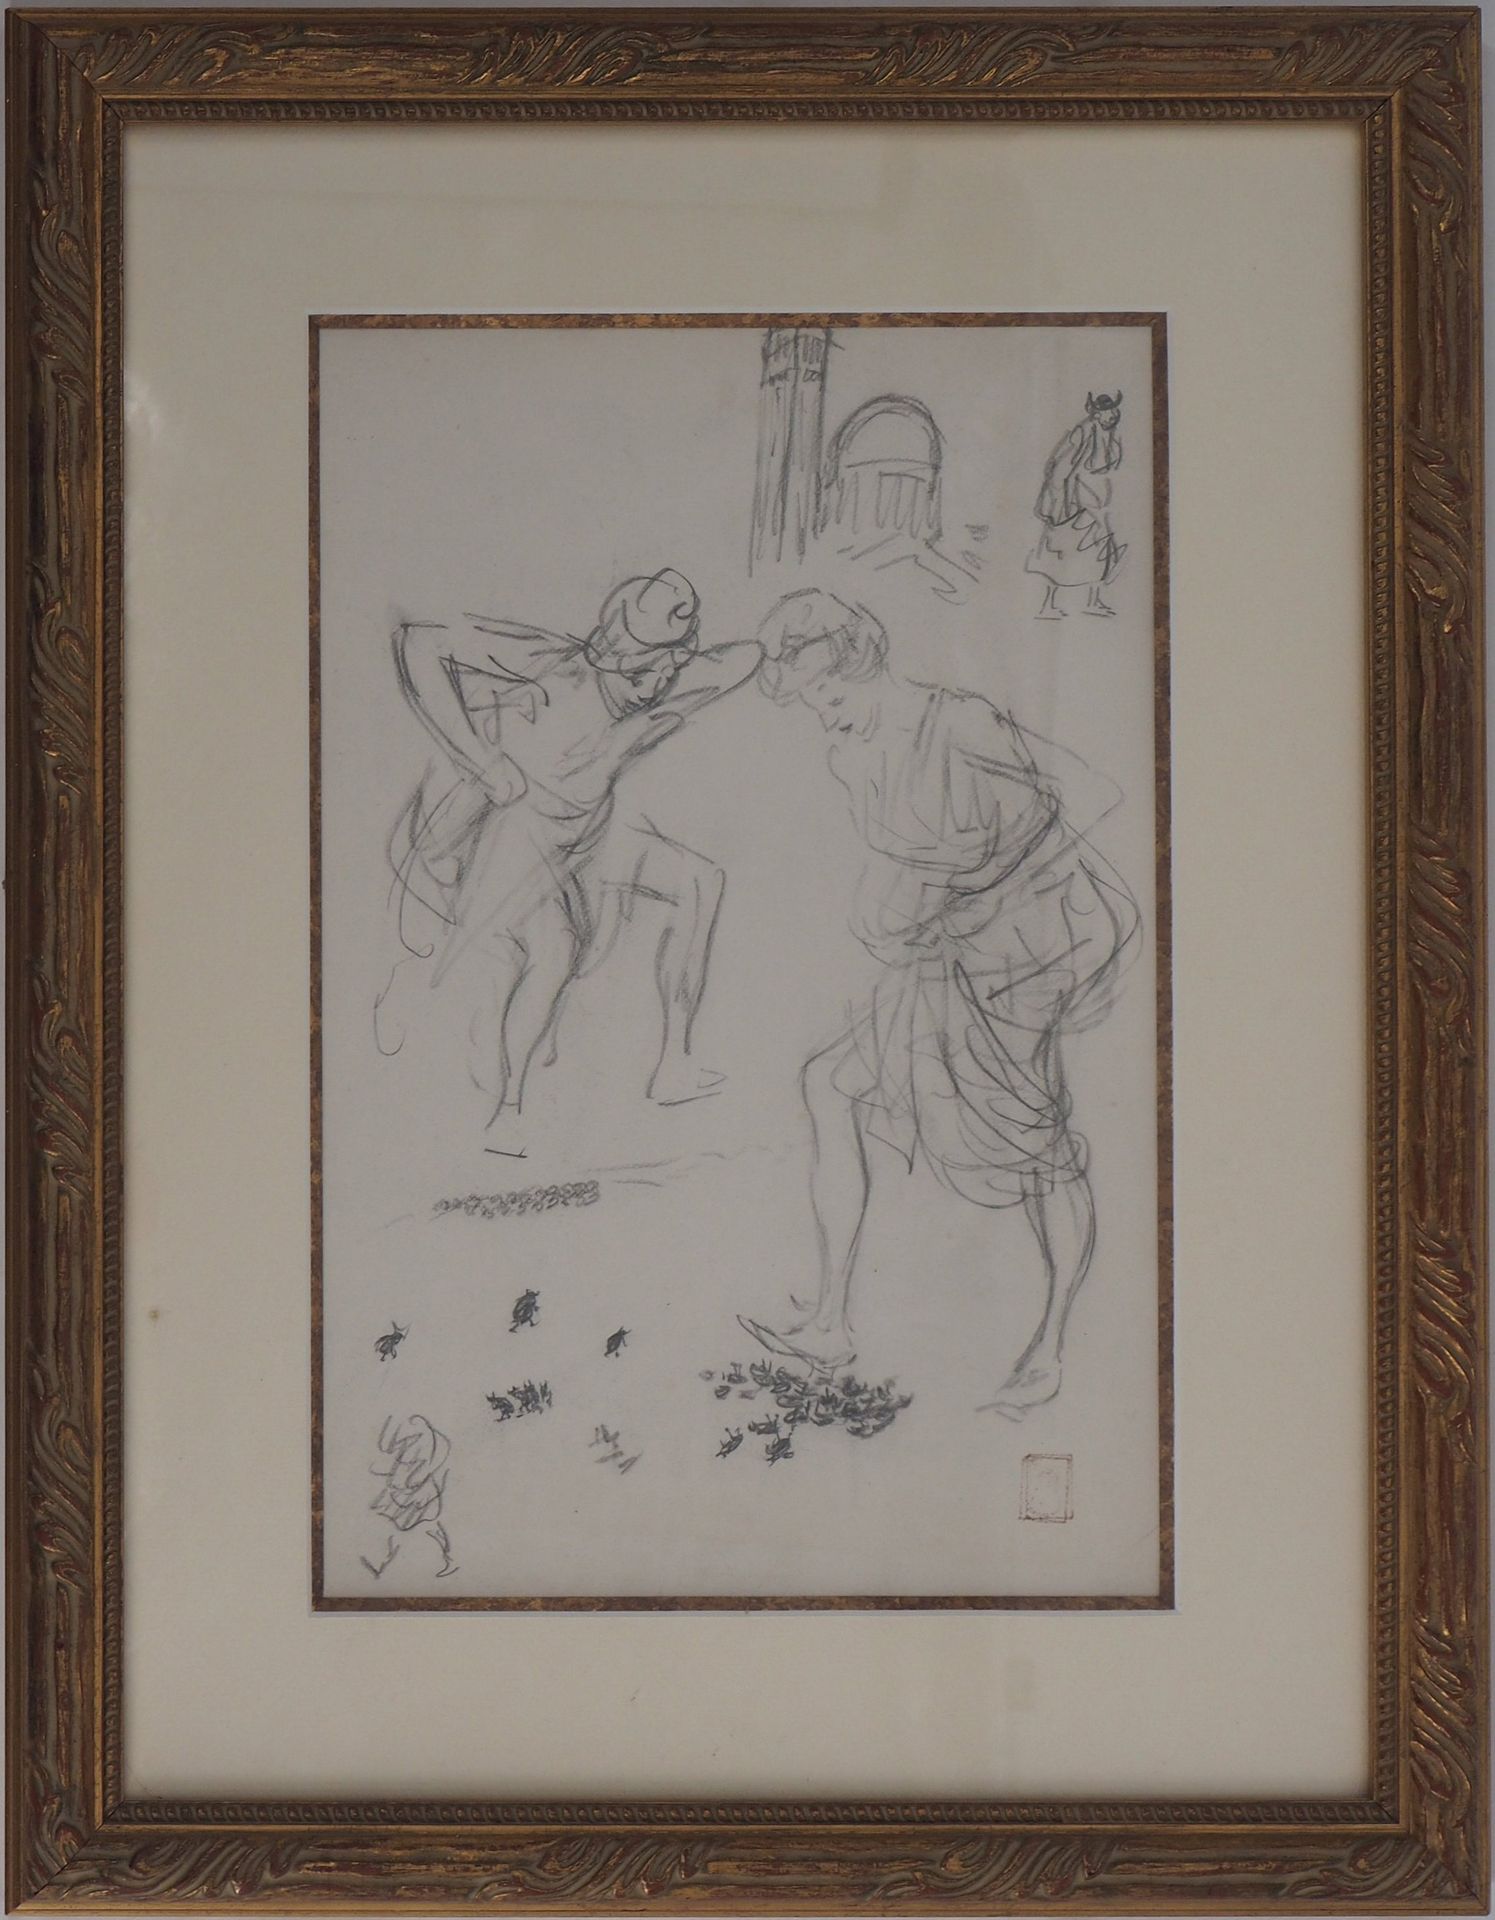 THÉOPHILE-ALEXANDRE STEINLEN 泰奥菲勒-亚历山大-斯坦伦(1859-1923)

猎杀臭虫

用石墨和树桩作画

签有艺术家的印章
&hellip;